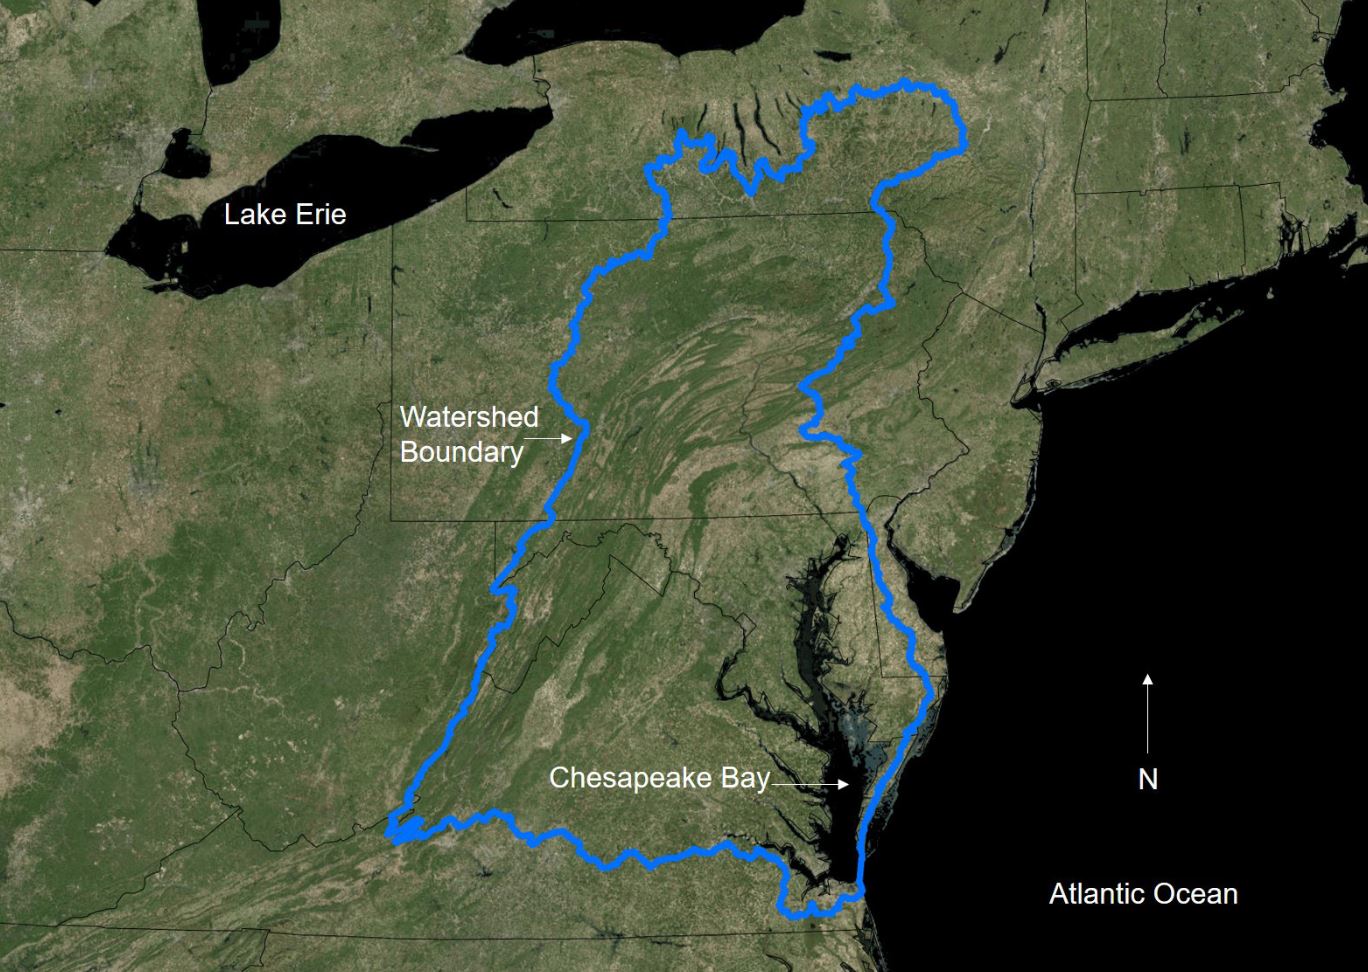 Chesapeake Bay Watershed Boundary